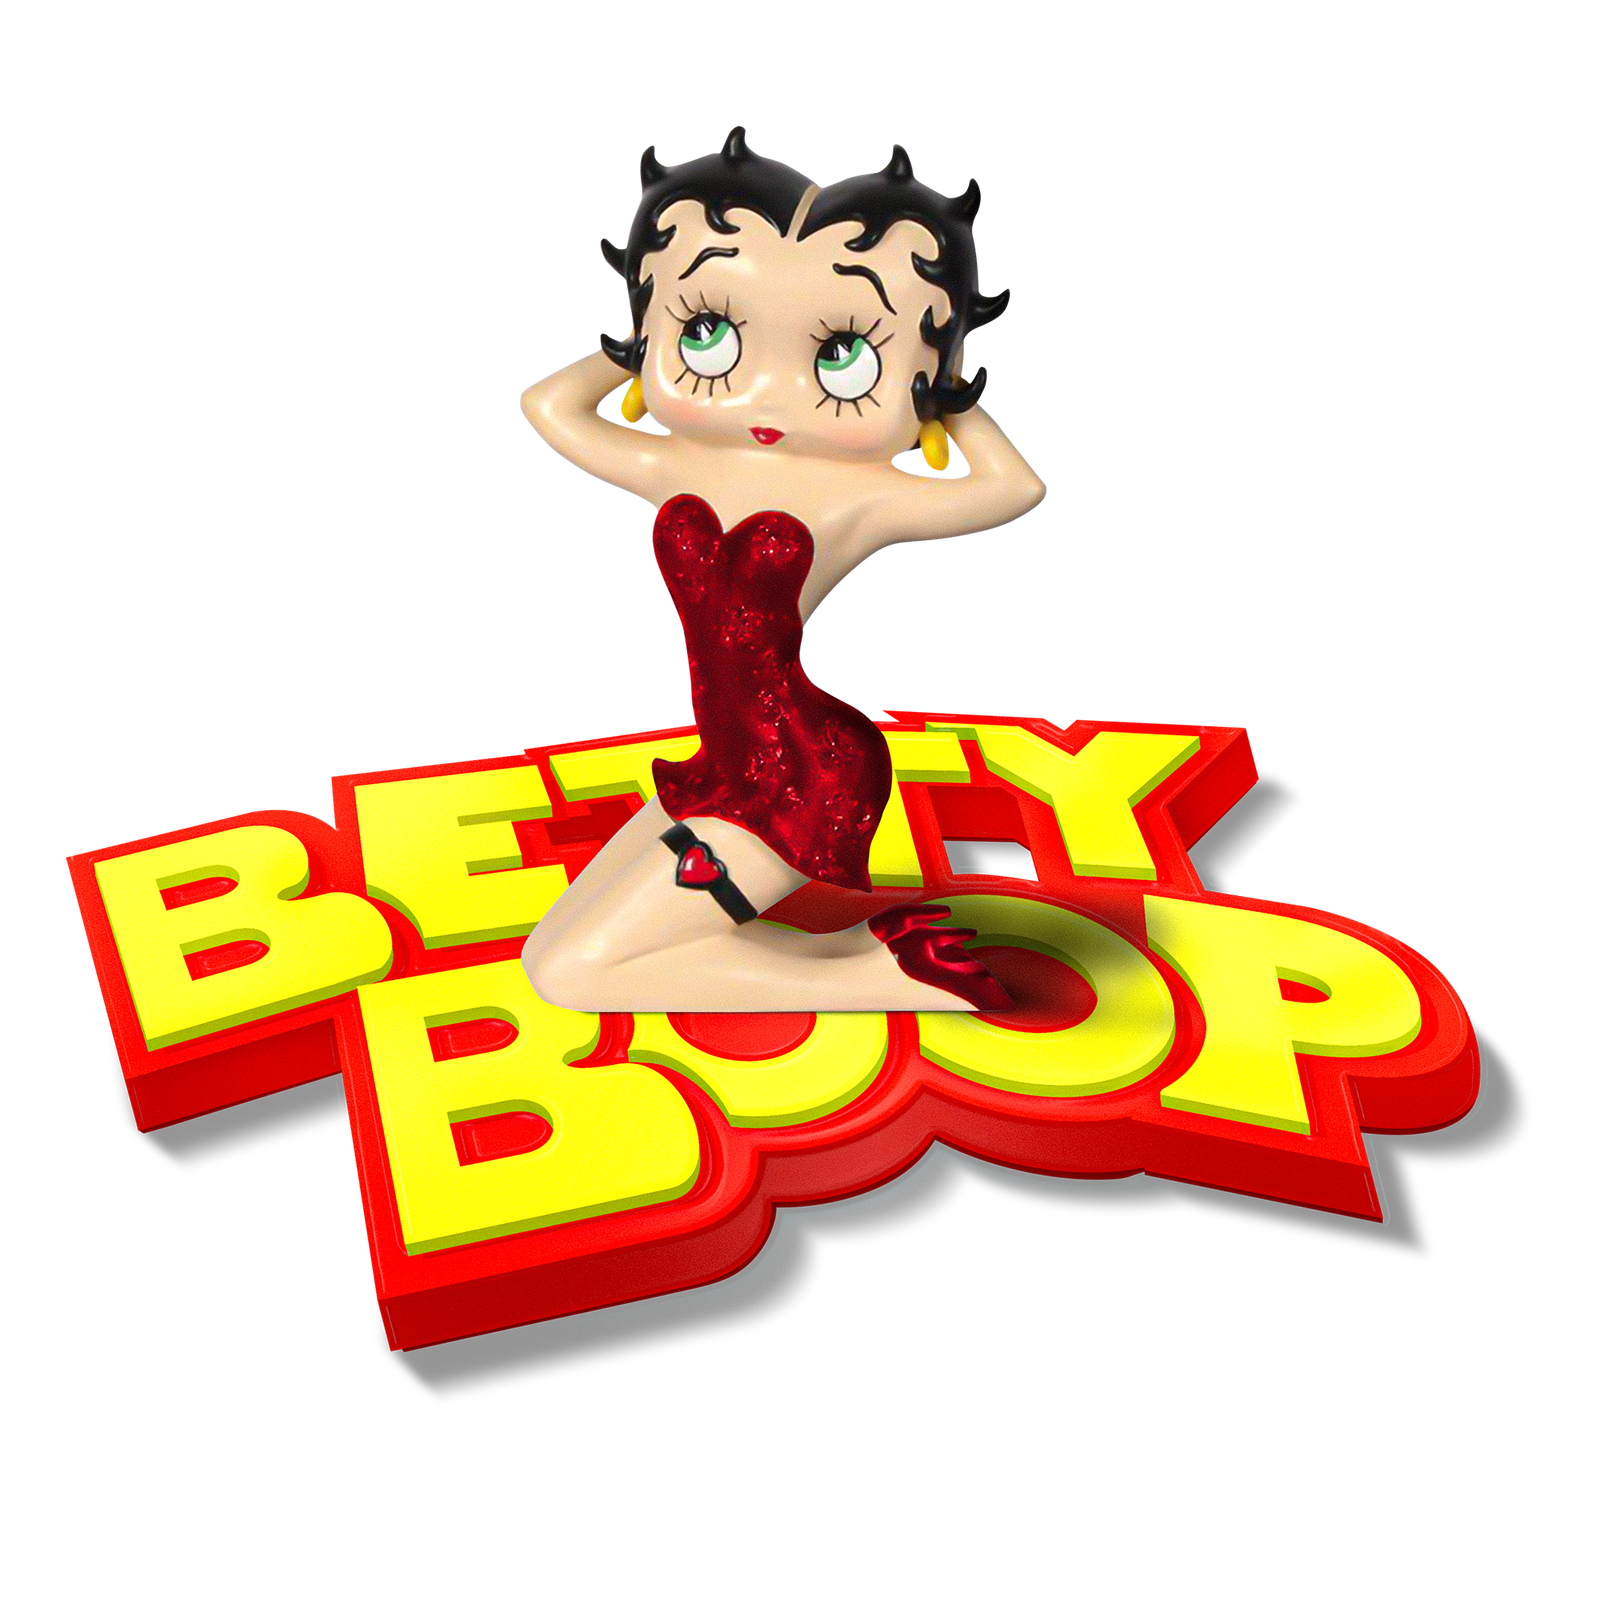 Betty Boop logo.